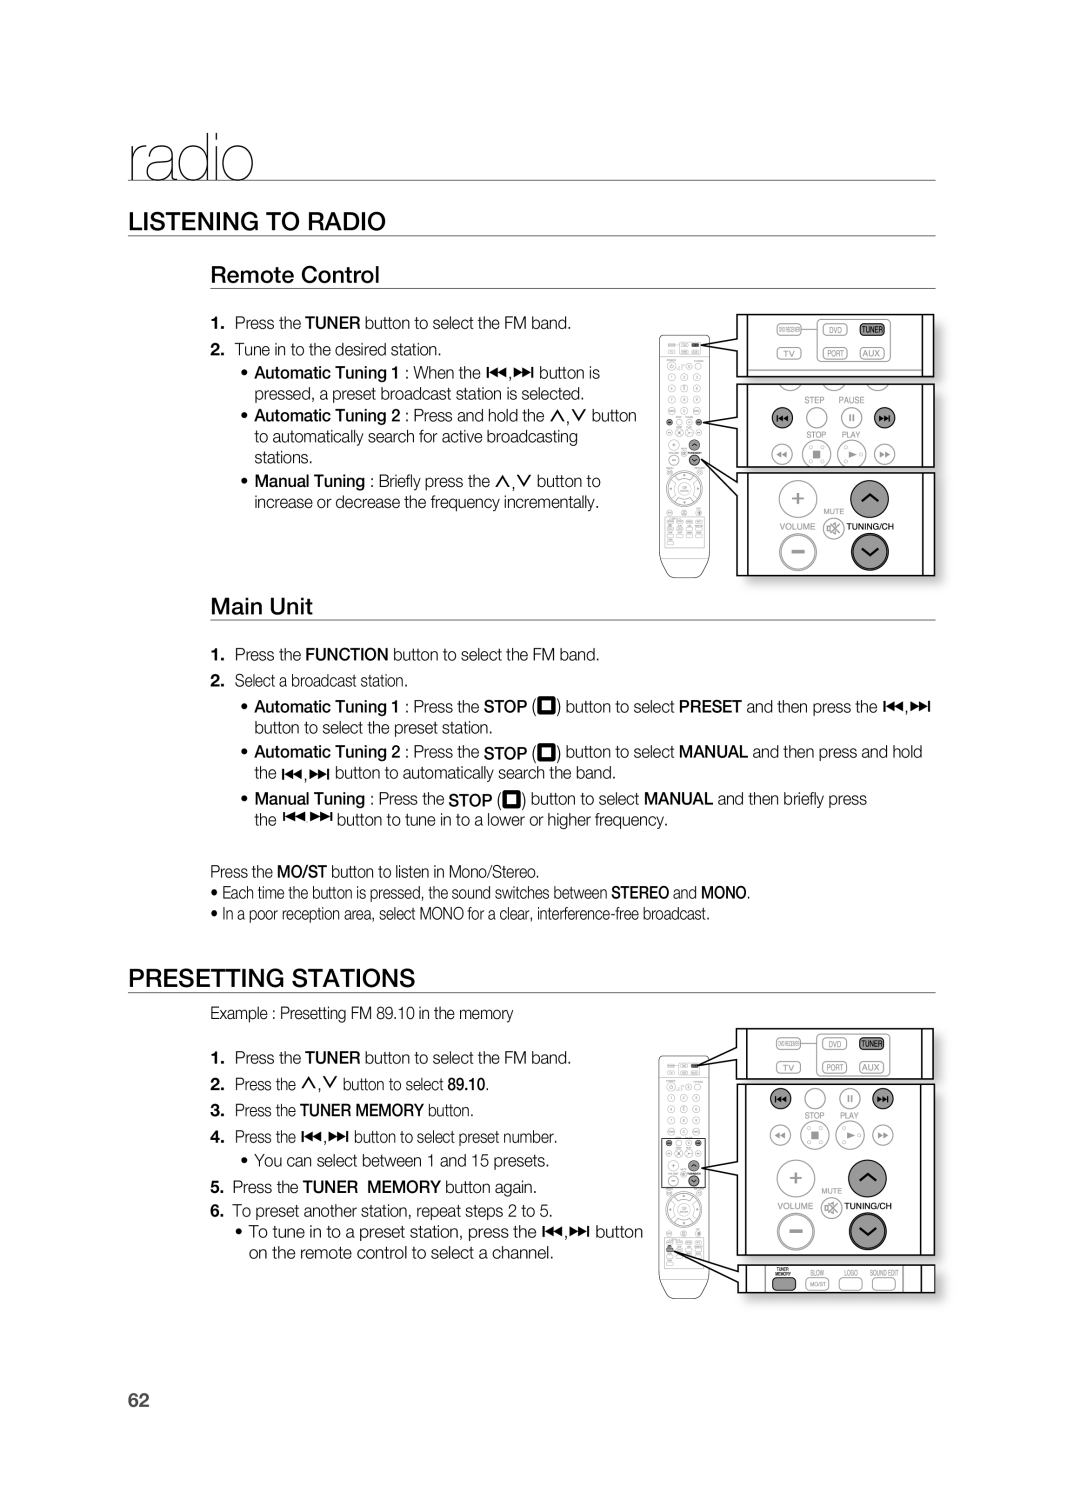 Samsung AH68-02055S manual radio, LiStEninG tO raDiO, PrESEttinG StatiOnS, remote Control, main Unit 